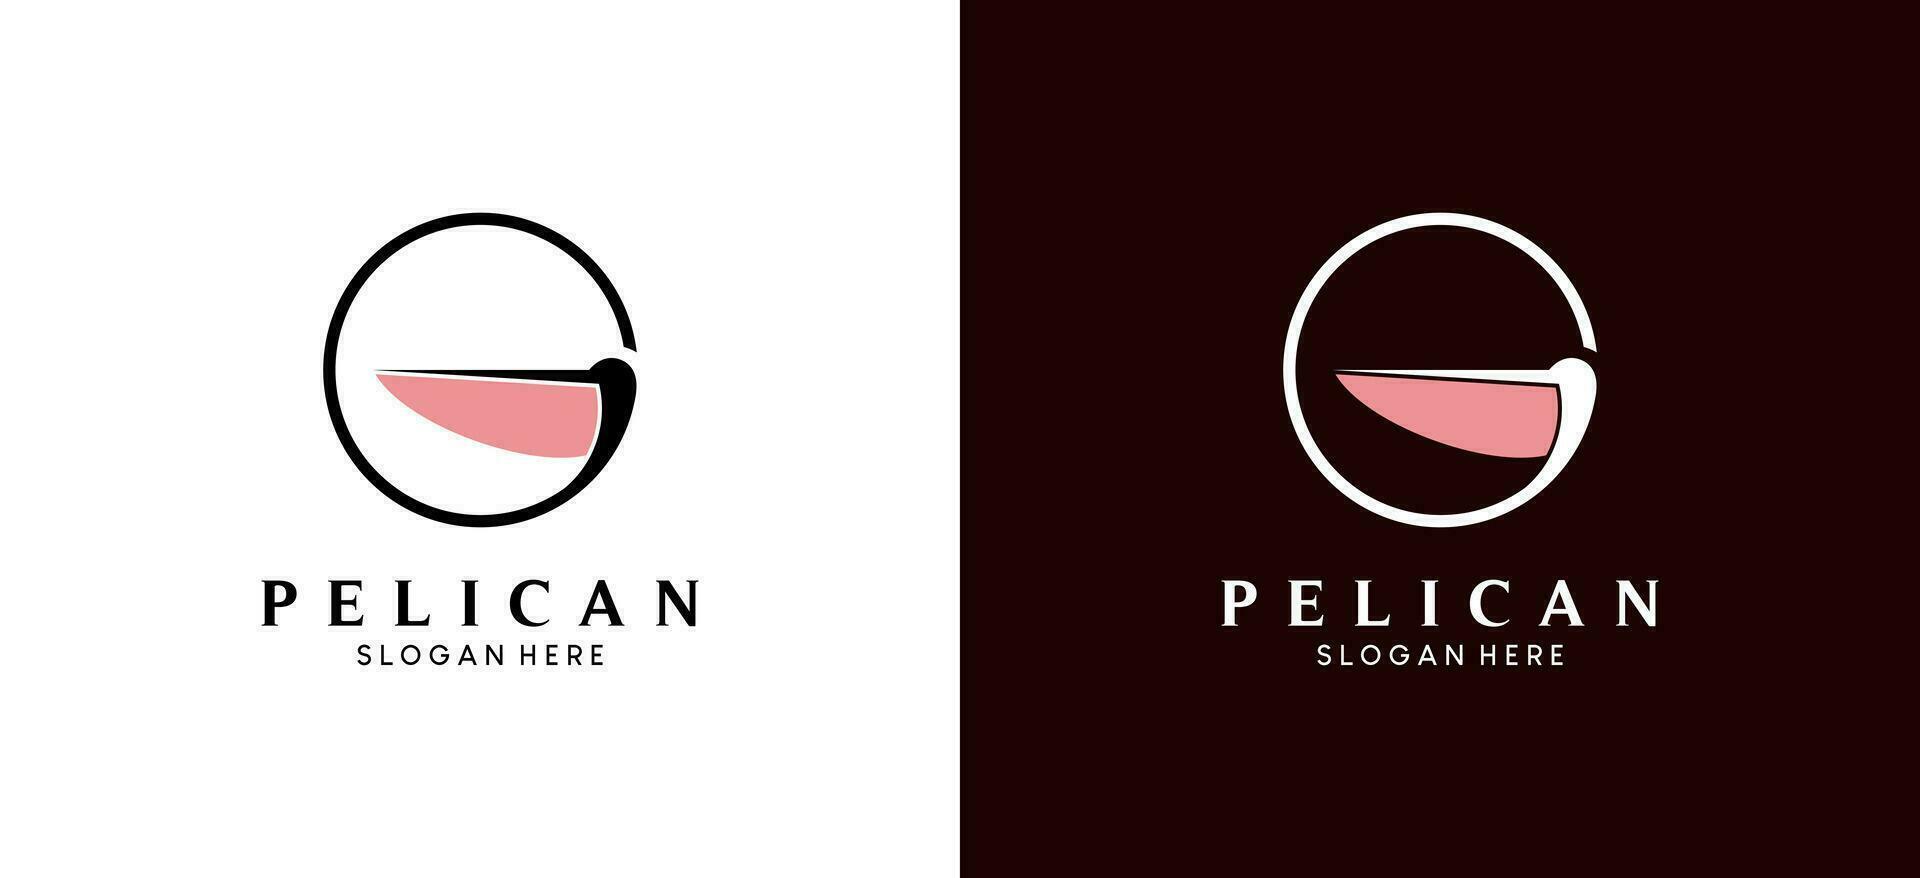 Pelican logo design vector illustration with minimalist letter g concept